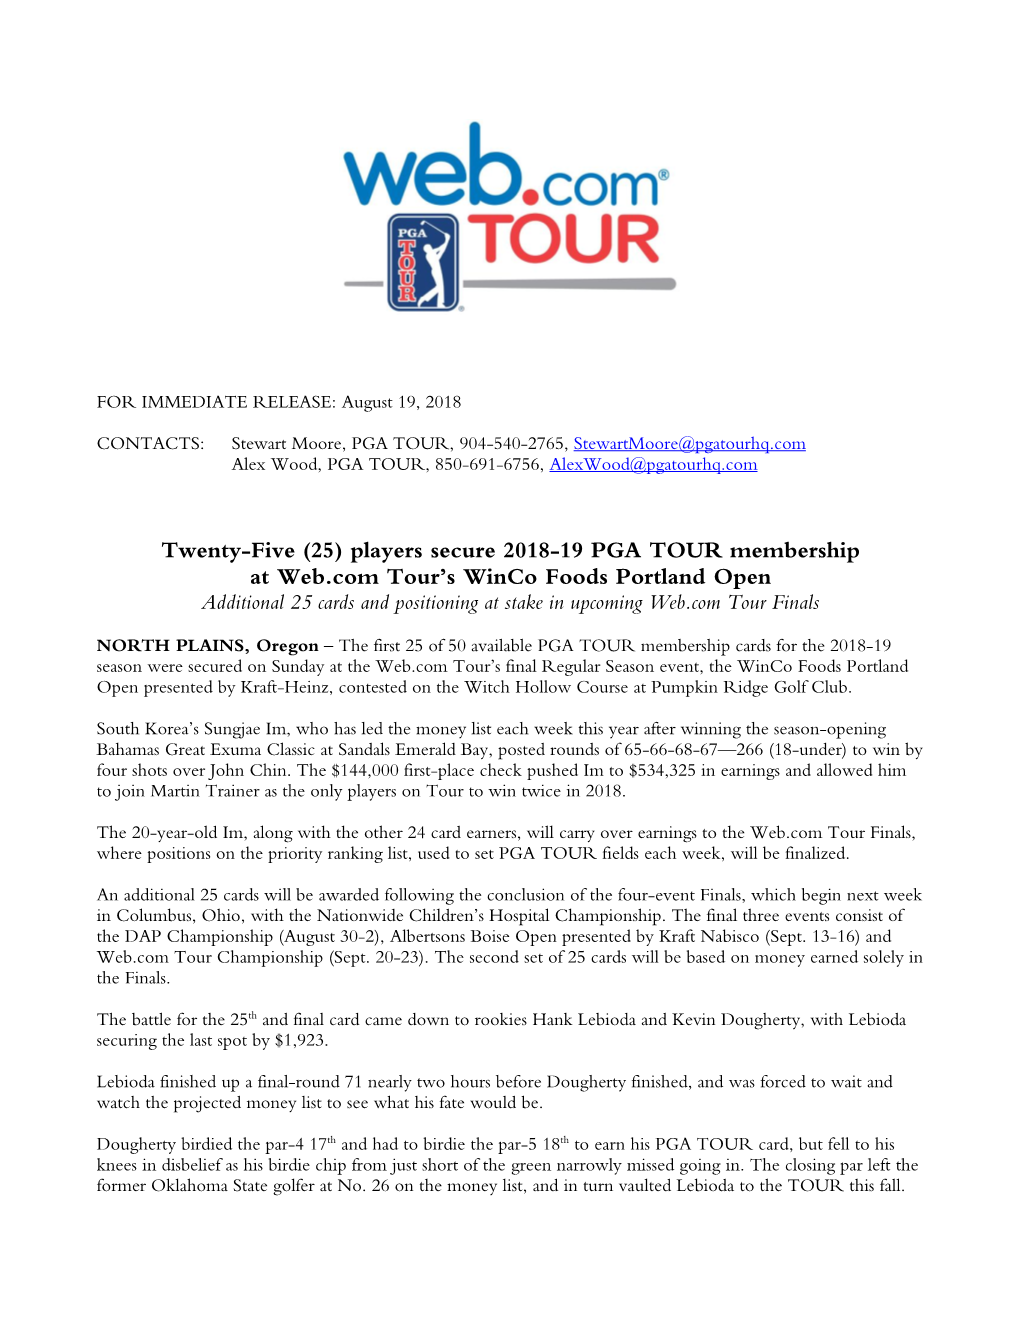 Twenty-Five (25) Players Secure 2018-19 PGA TOUR Membership At